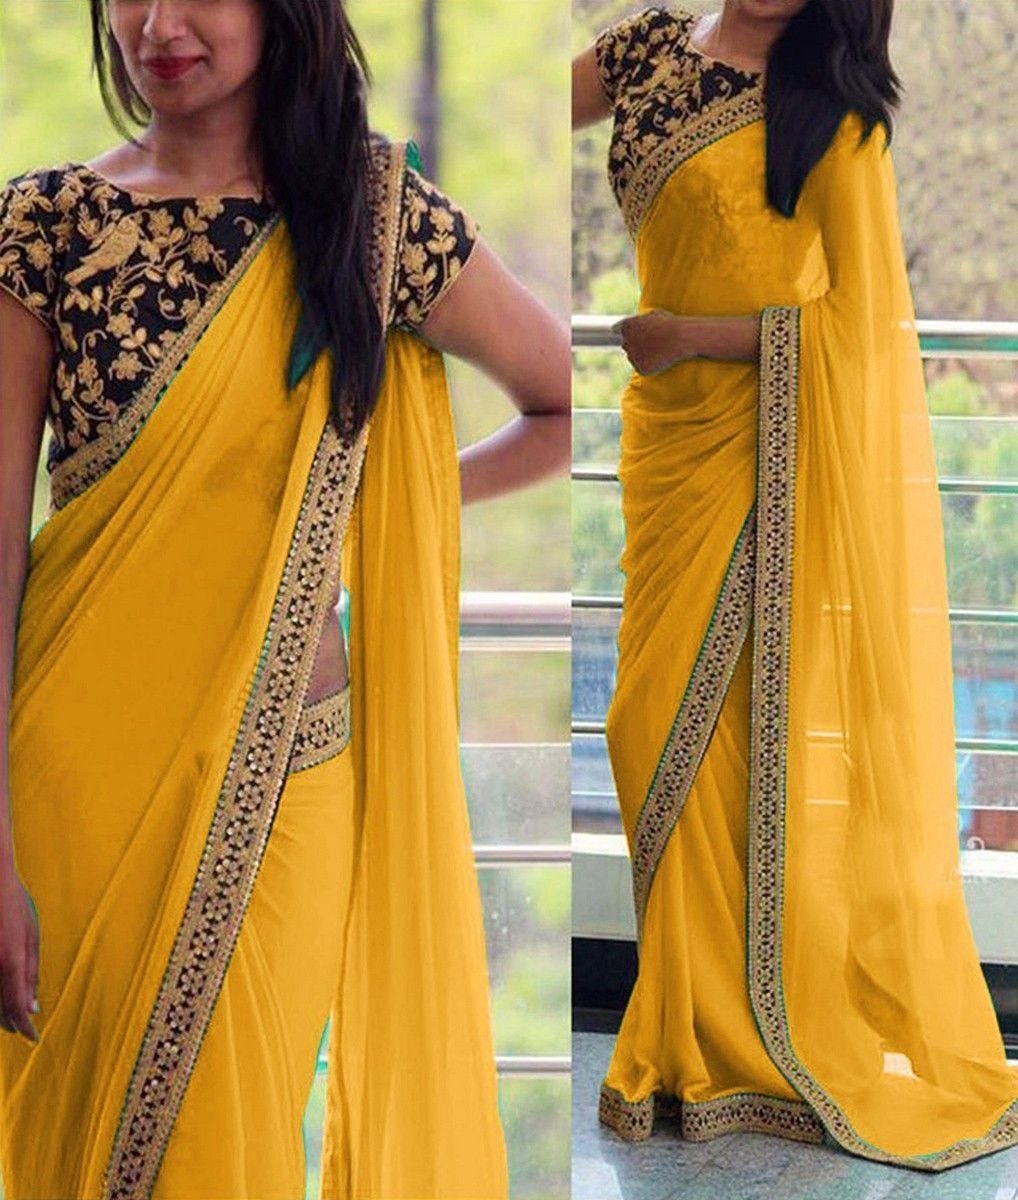 Best Saree Shapewear In India  How To Drape Perfect Saree